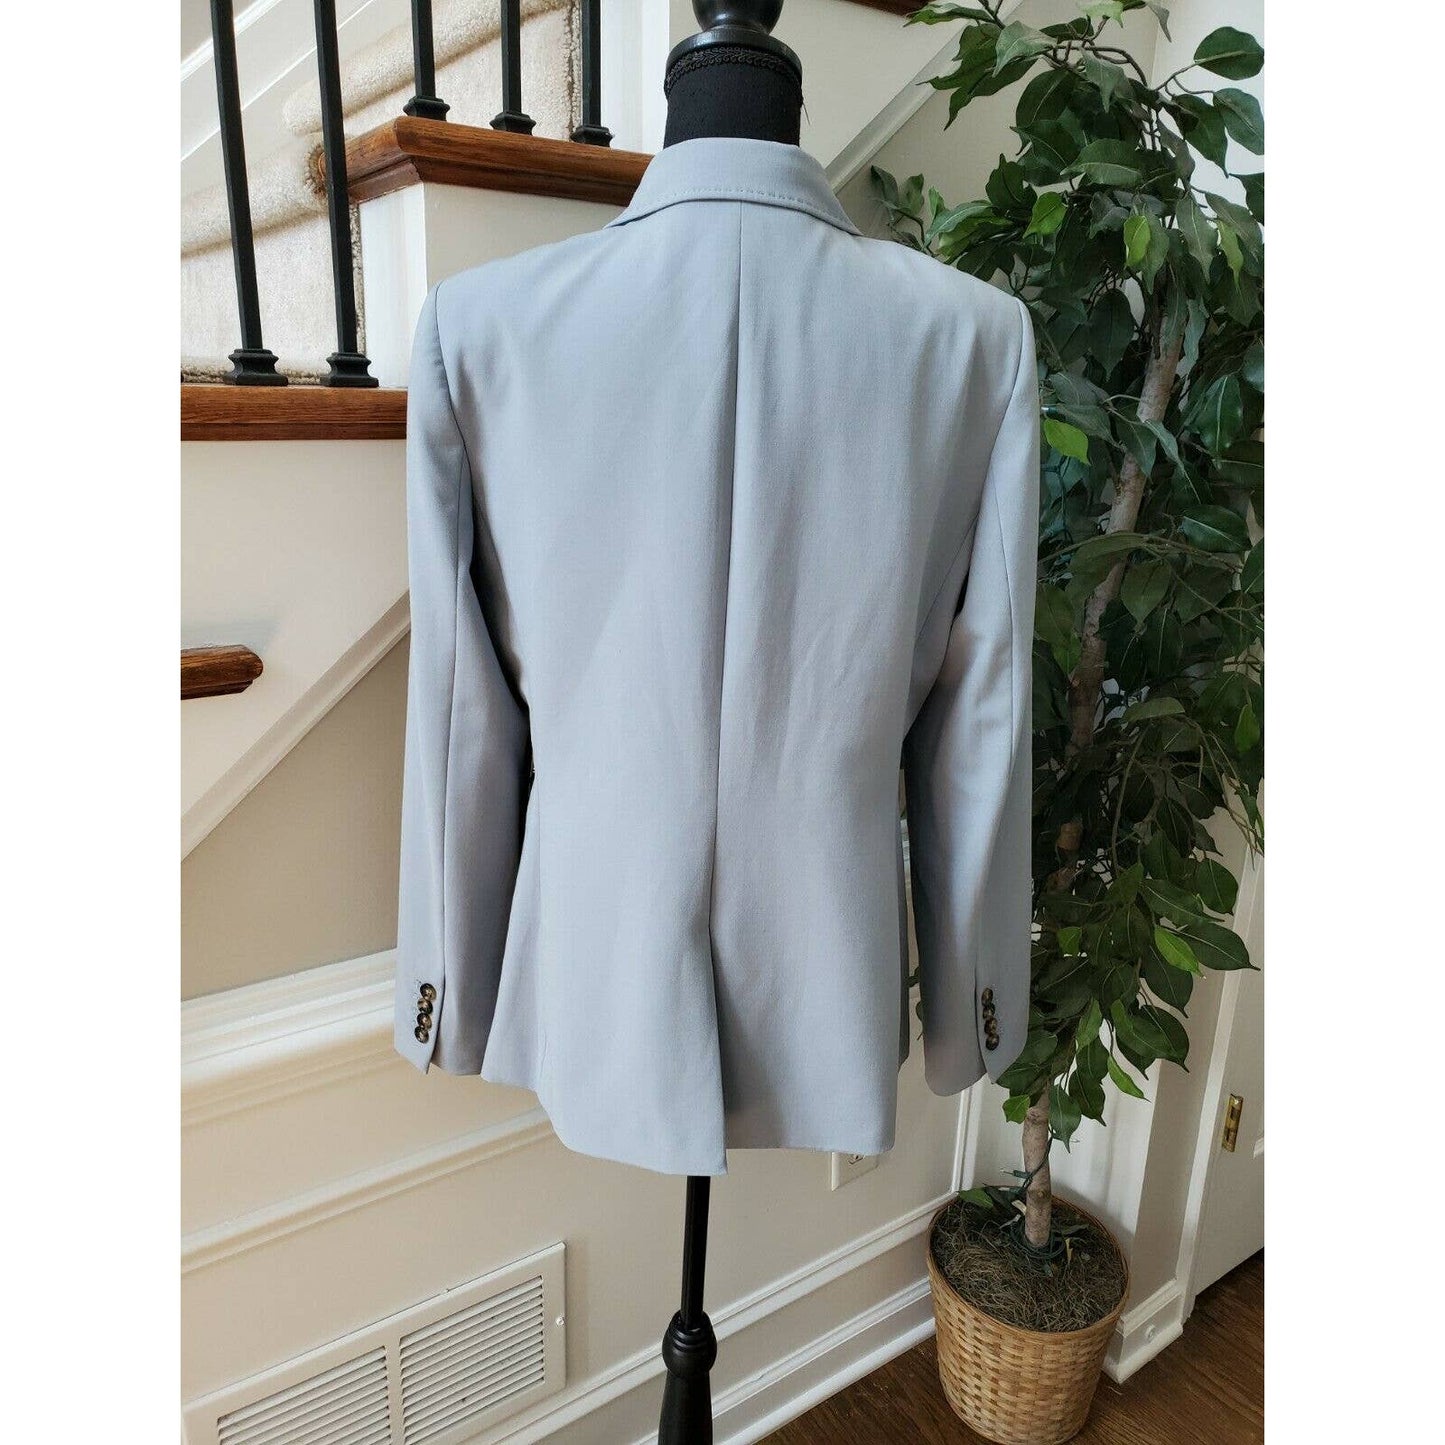 Dkny Women's Gray Polyester One Button Blazer Long Sleeve Coat Size 14